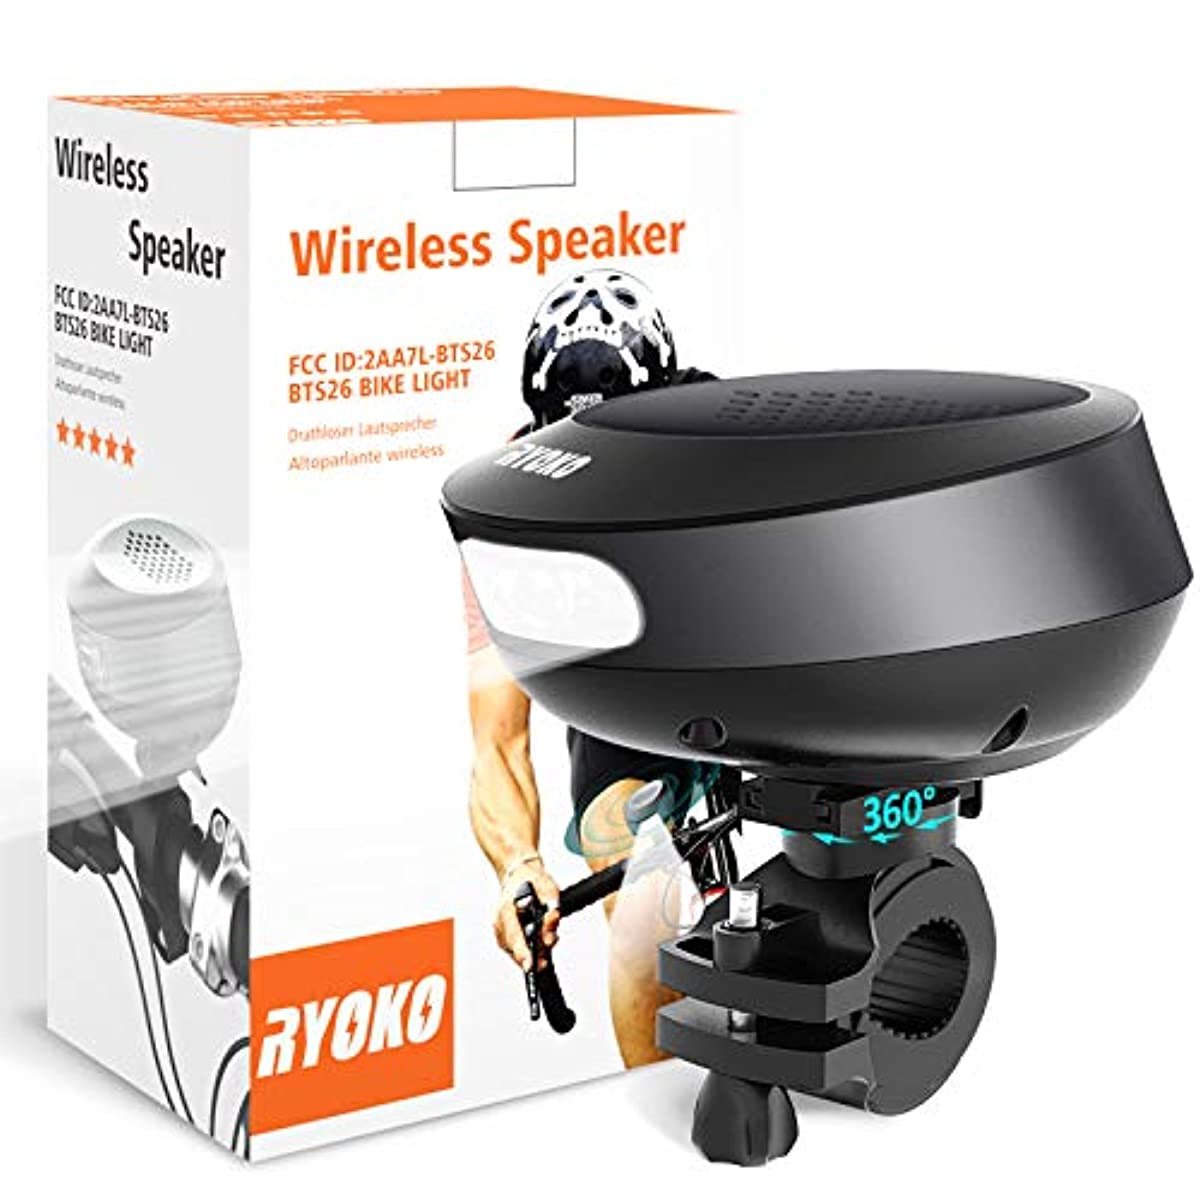 2-in-1 RYOKO Wireless Waterproof Bike Speaker with Bicycle Mount for Cycling Camping Bicycle Travel Bike Speaker and Bike Light